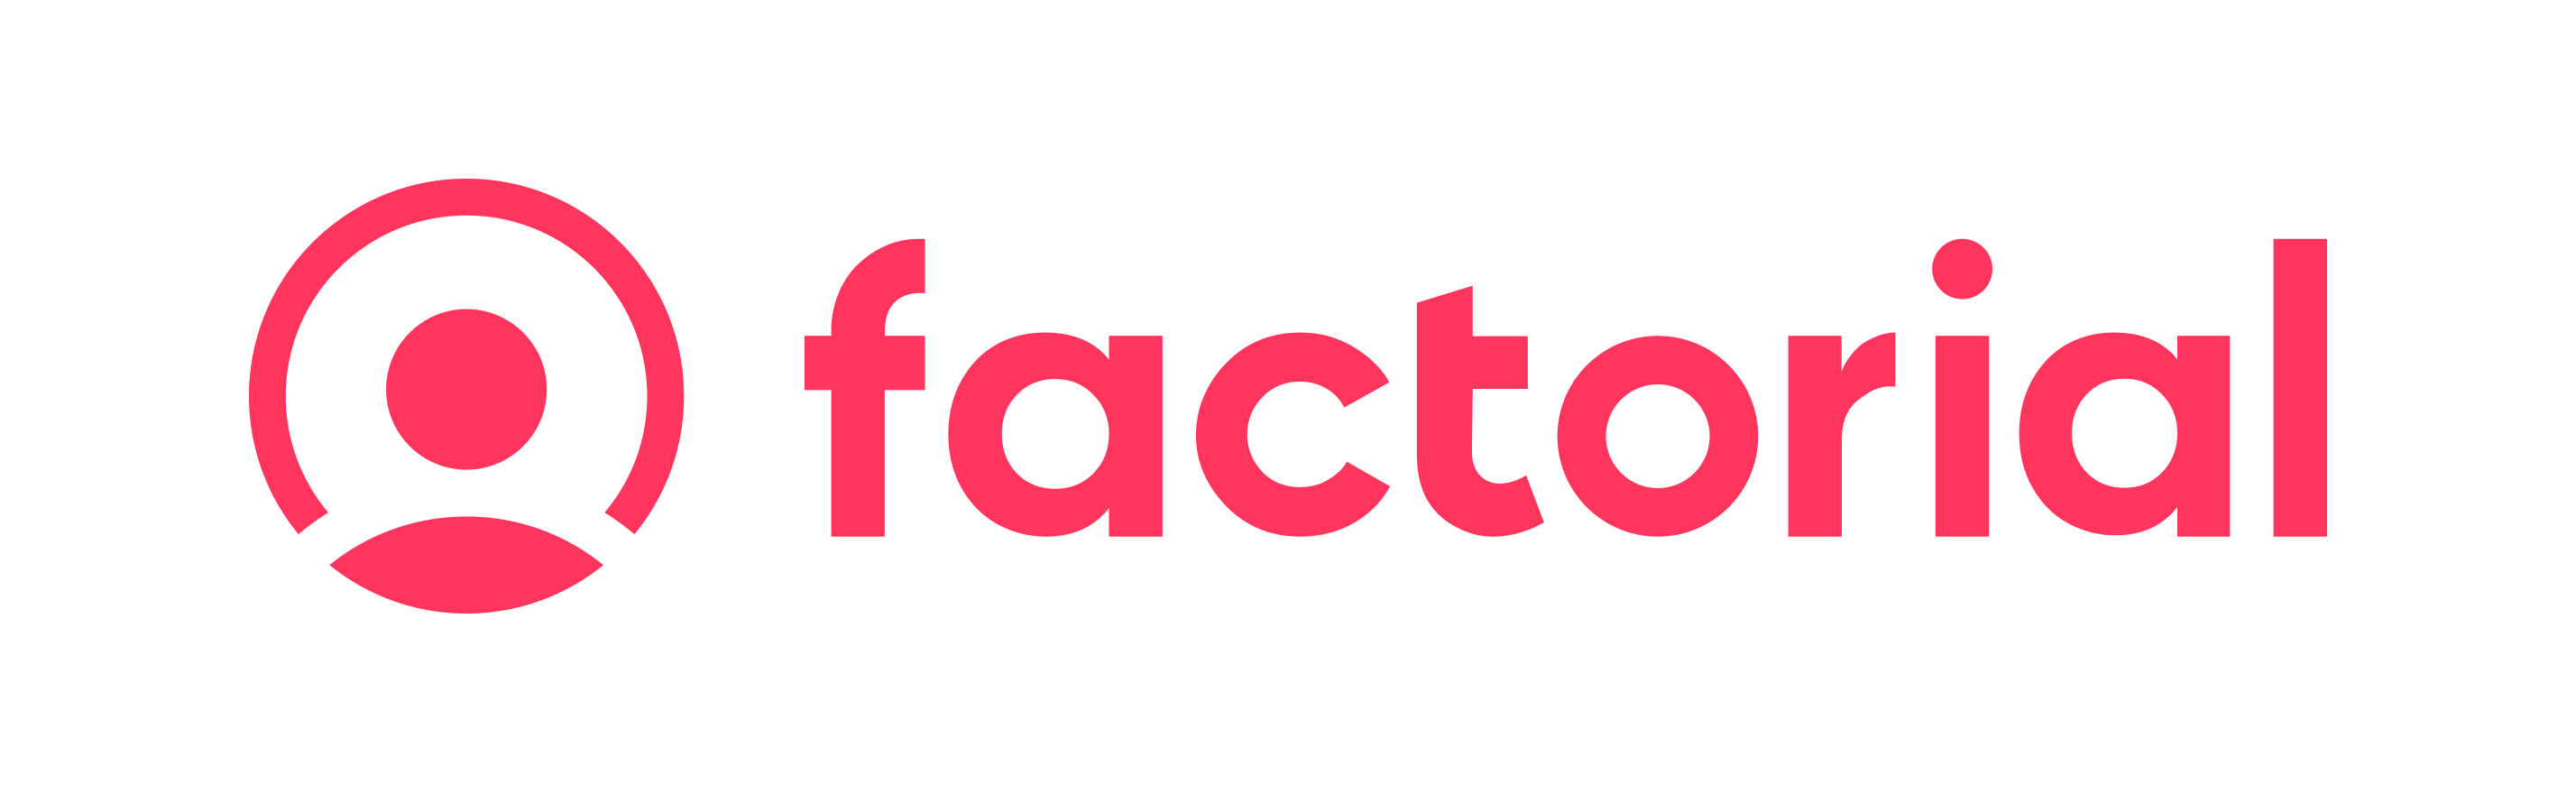 Factorial HR Logo